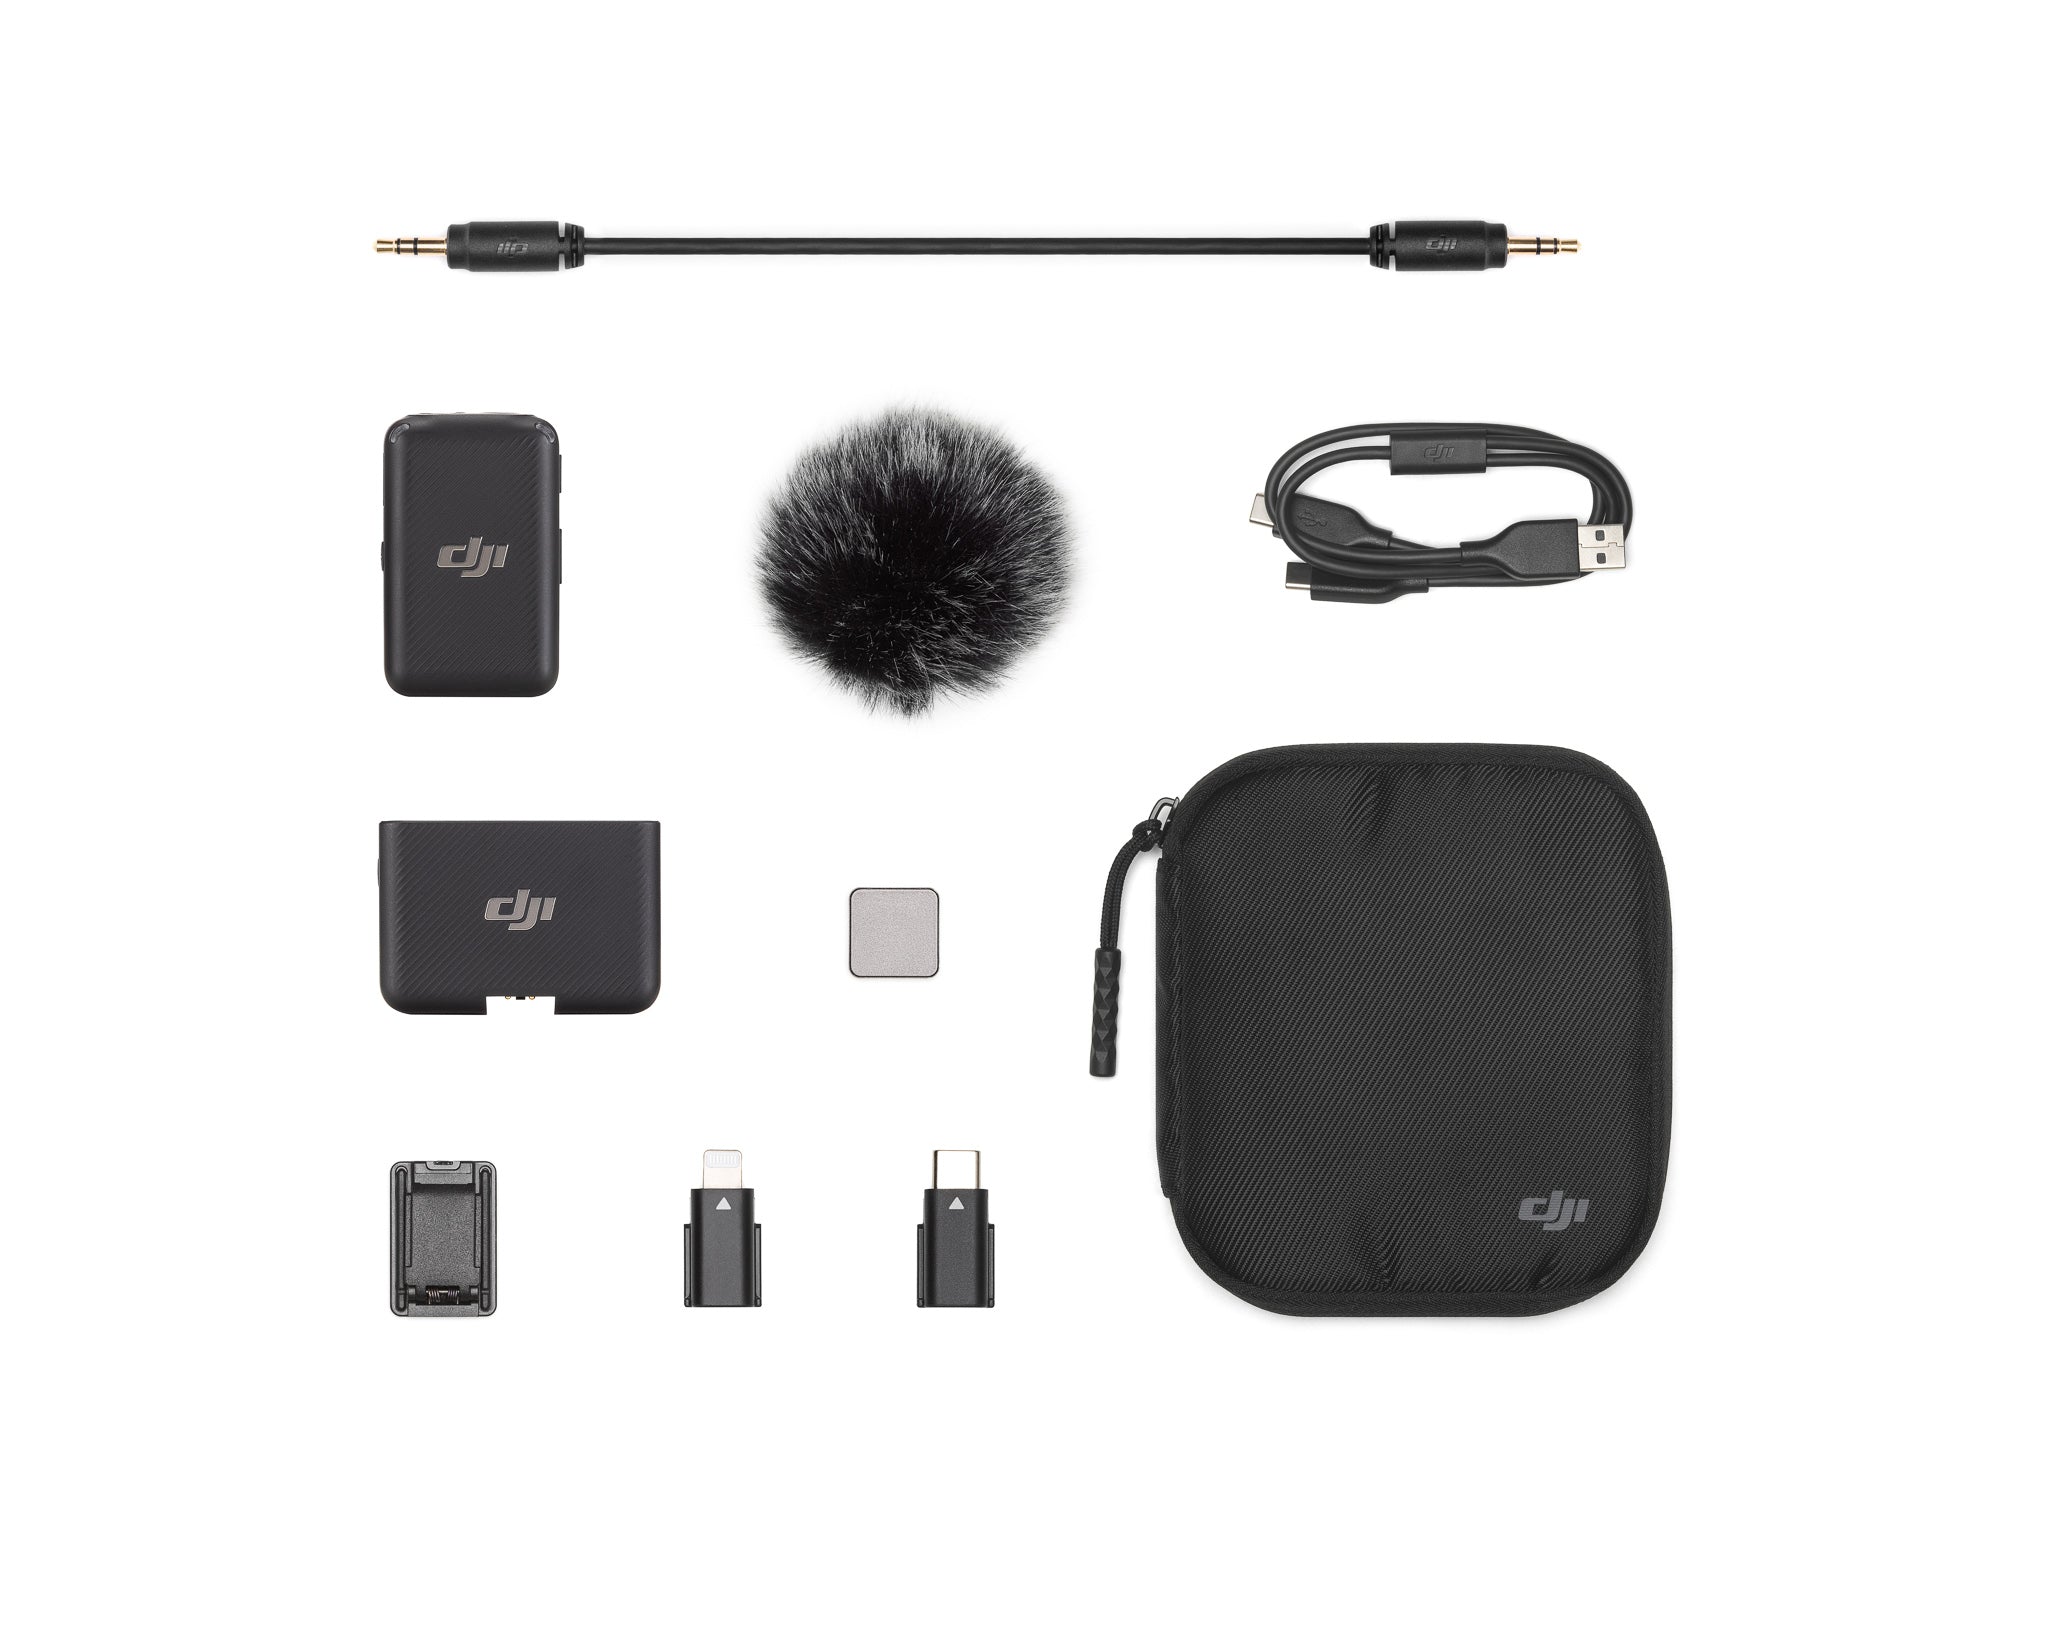 DJI Mic Wireless Microphone Kit - (1Tx + 1Rx) Includes 1 Transmitters